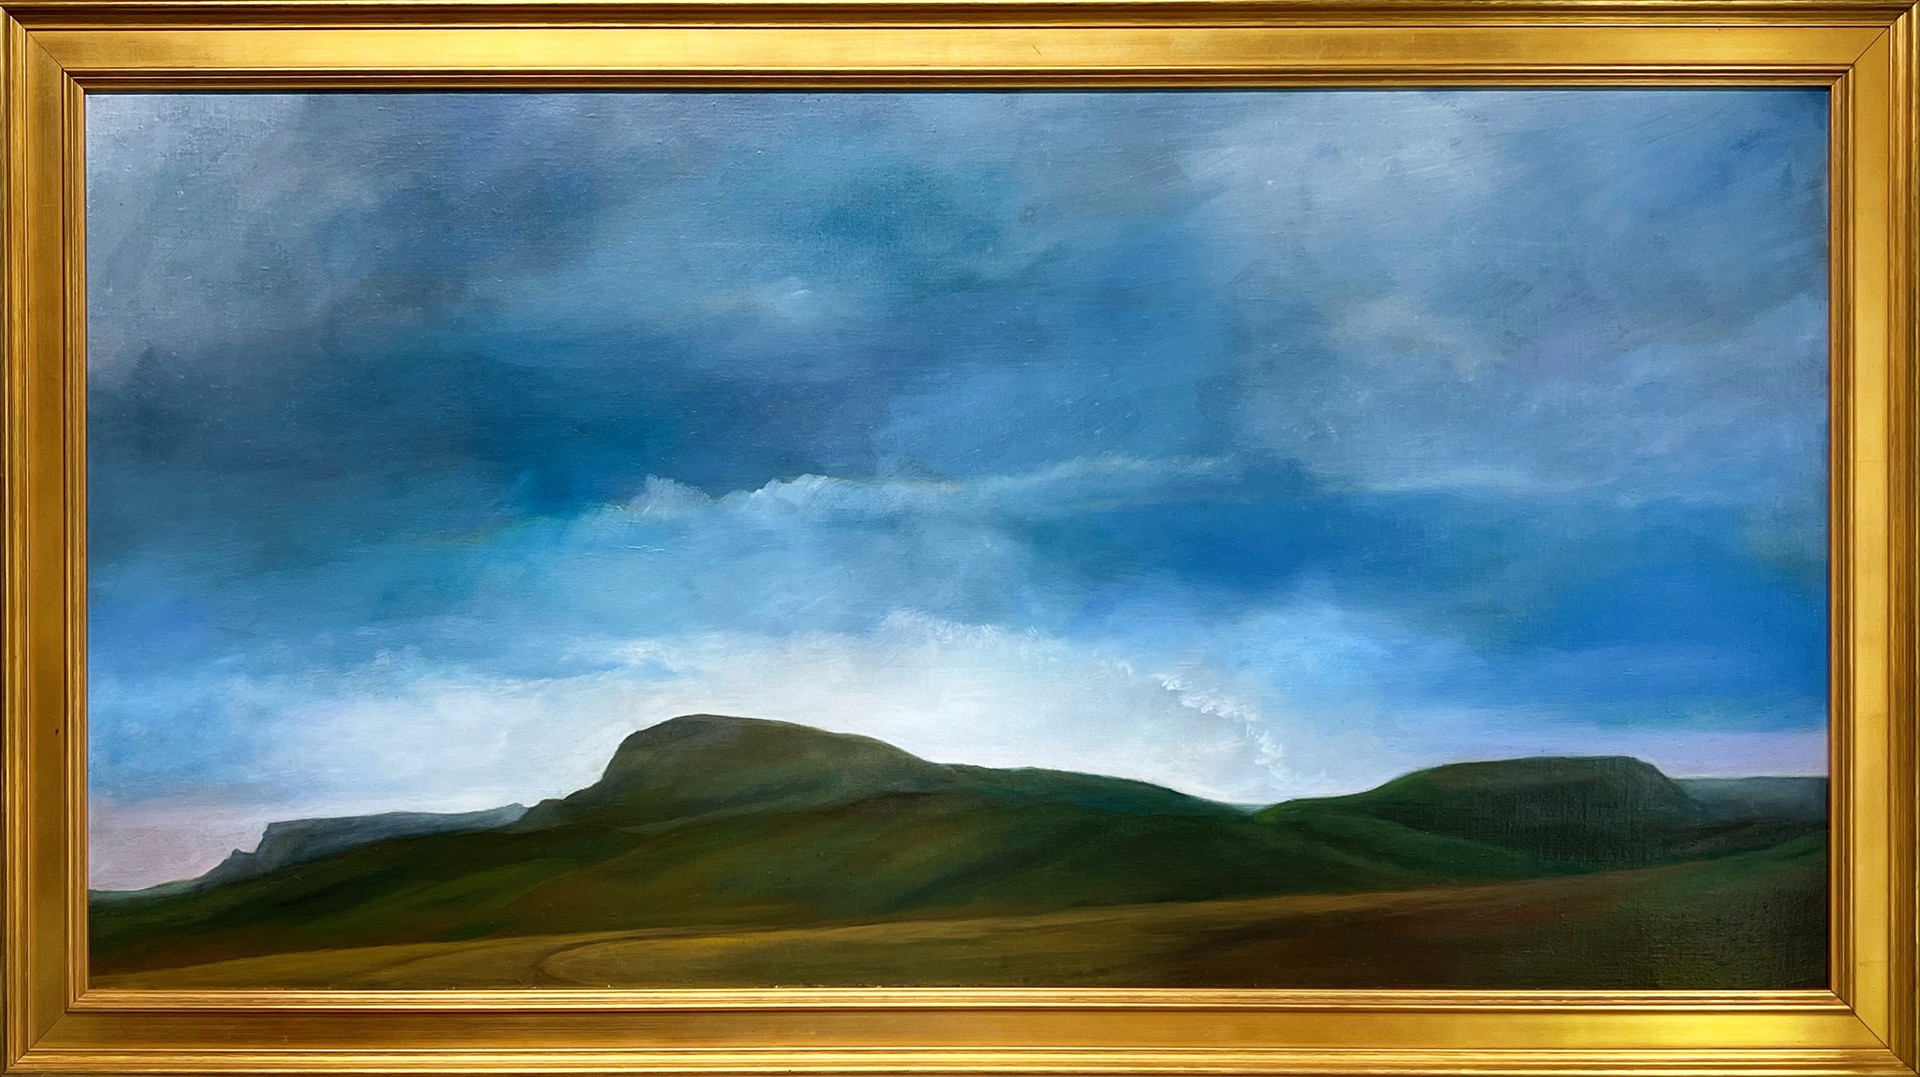 Shower of Light, Scotland Highlands by Judy Reynolds